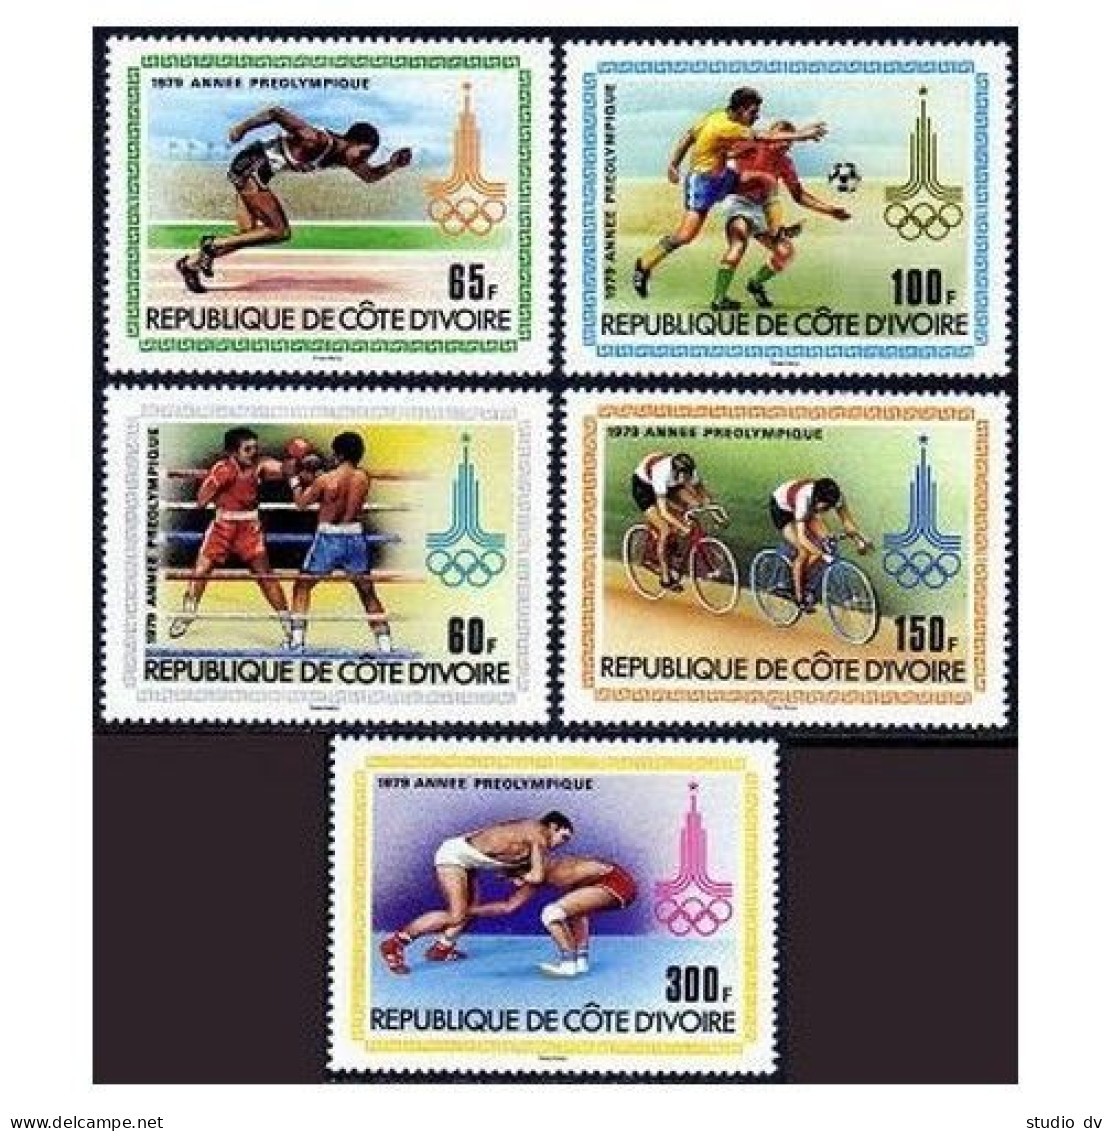 Ivory Coast 522-526,527, MNH. Olympics Moscow-80.Boxing,Running,Soccer,Bicycling - Ivory Coast (1960-...)